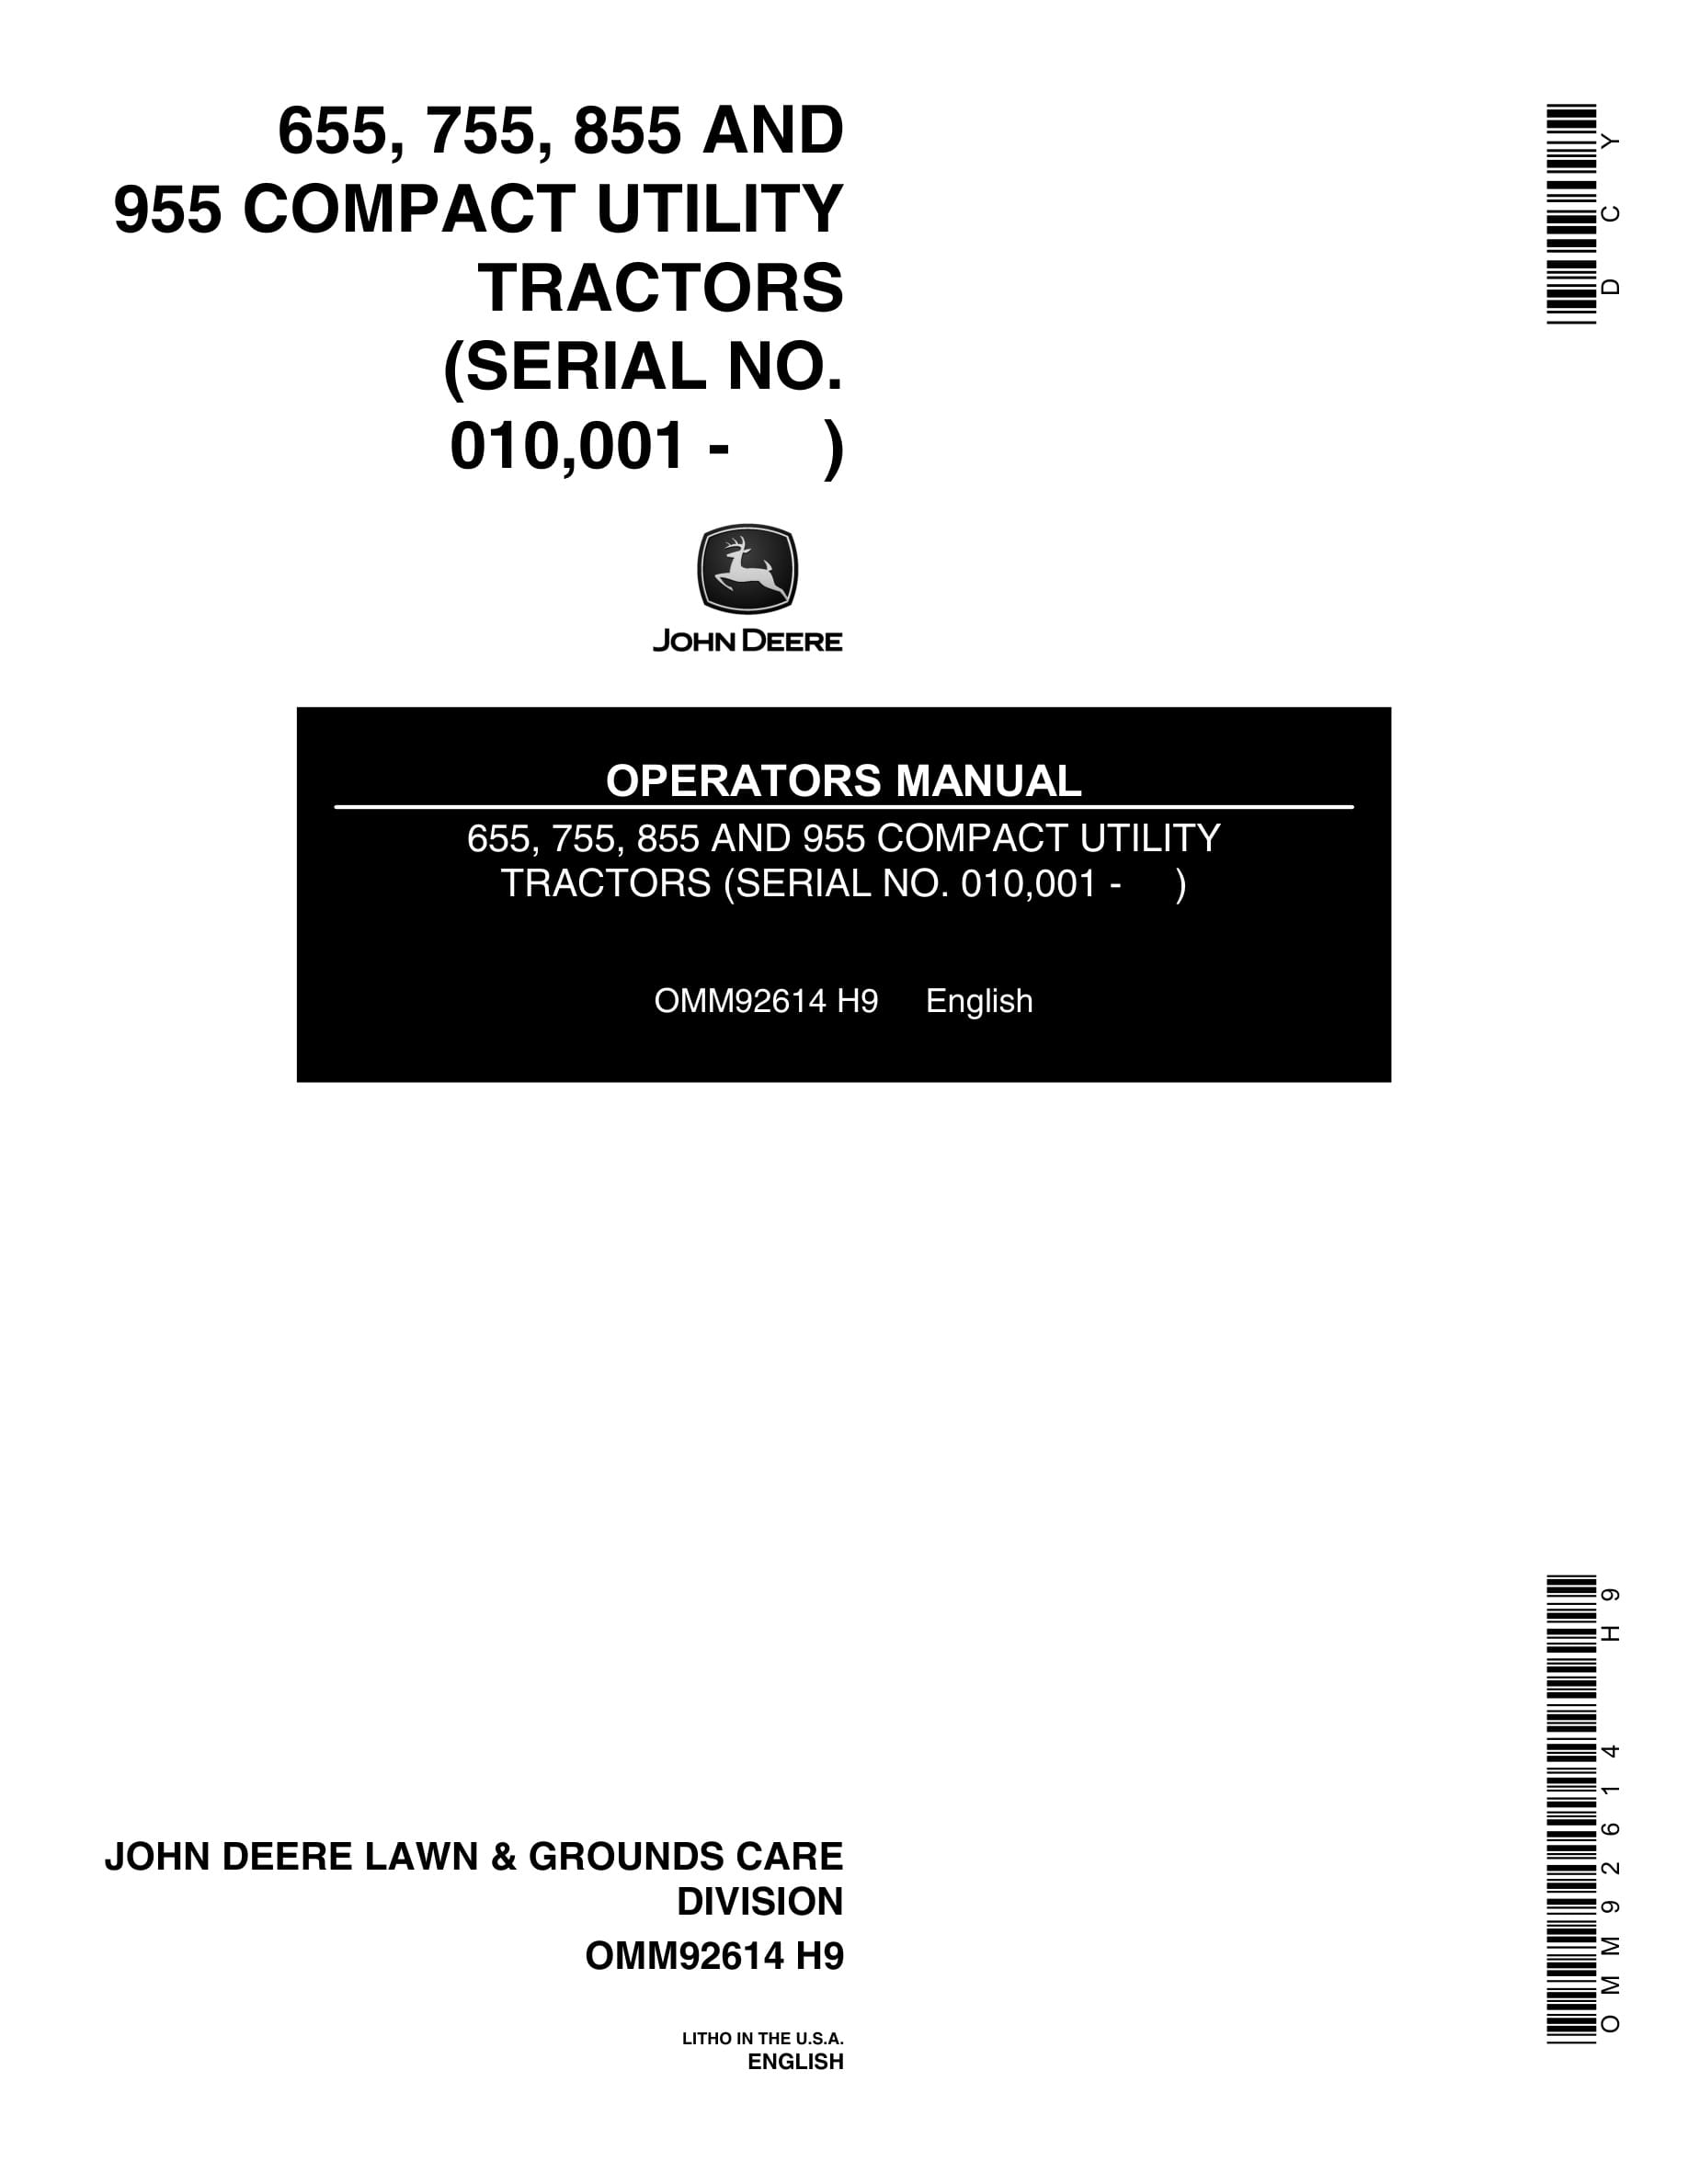 John Deere 655, 755, 855 AND 955 Tractor Operator Manual OMM92614-1